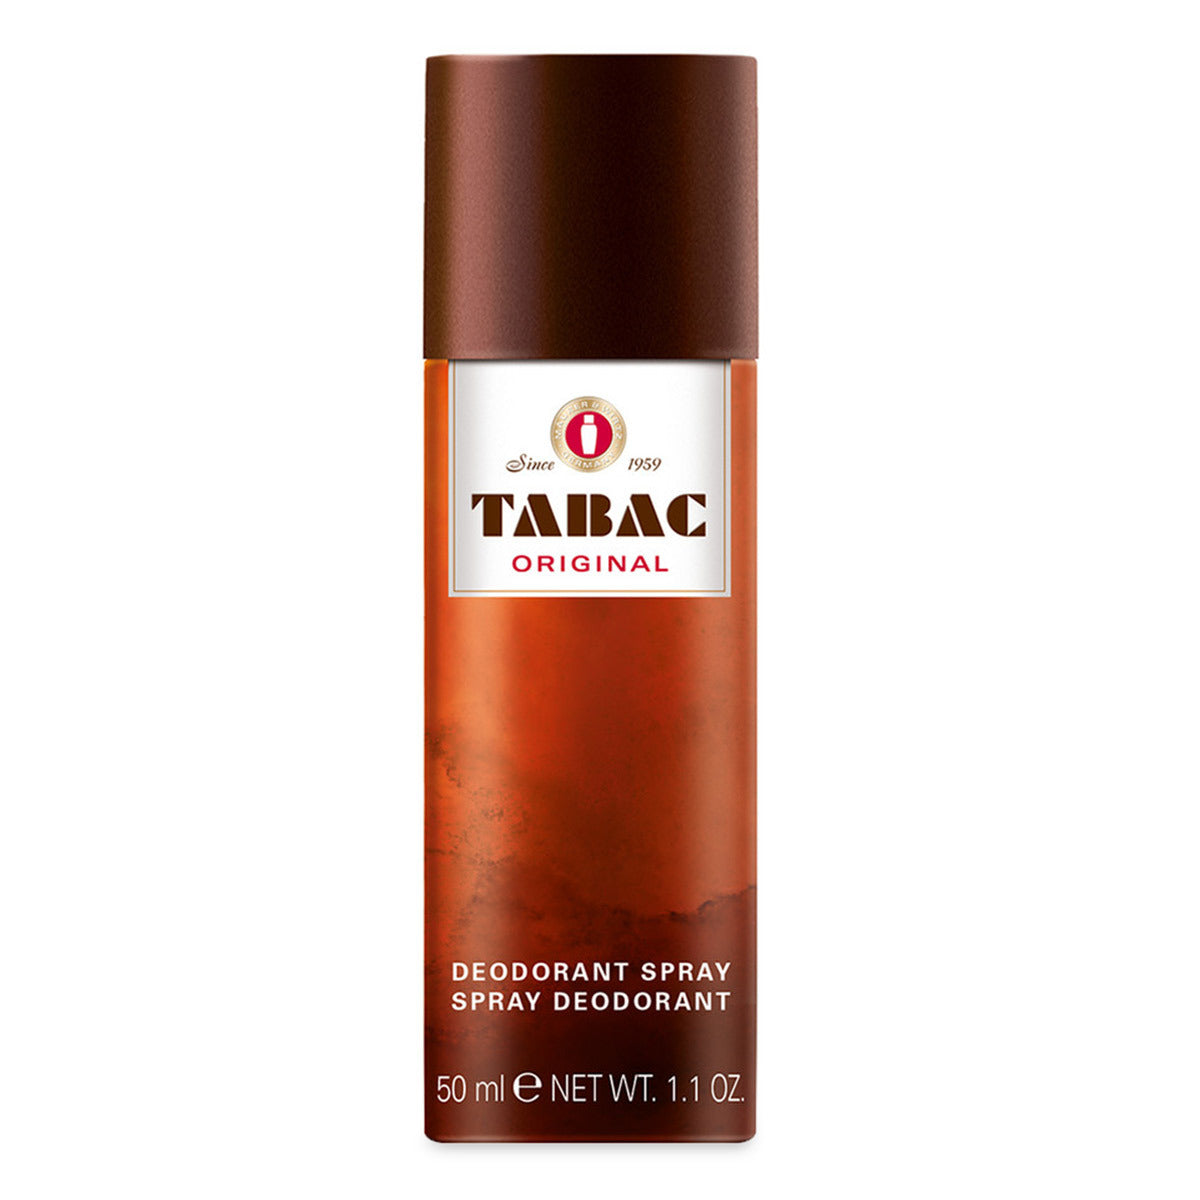 Primary image of Tabac Original Deodorant